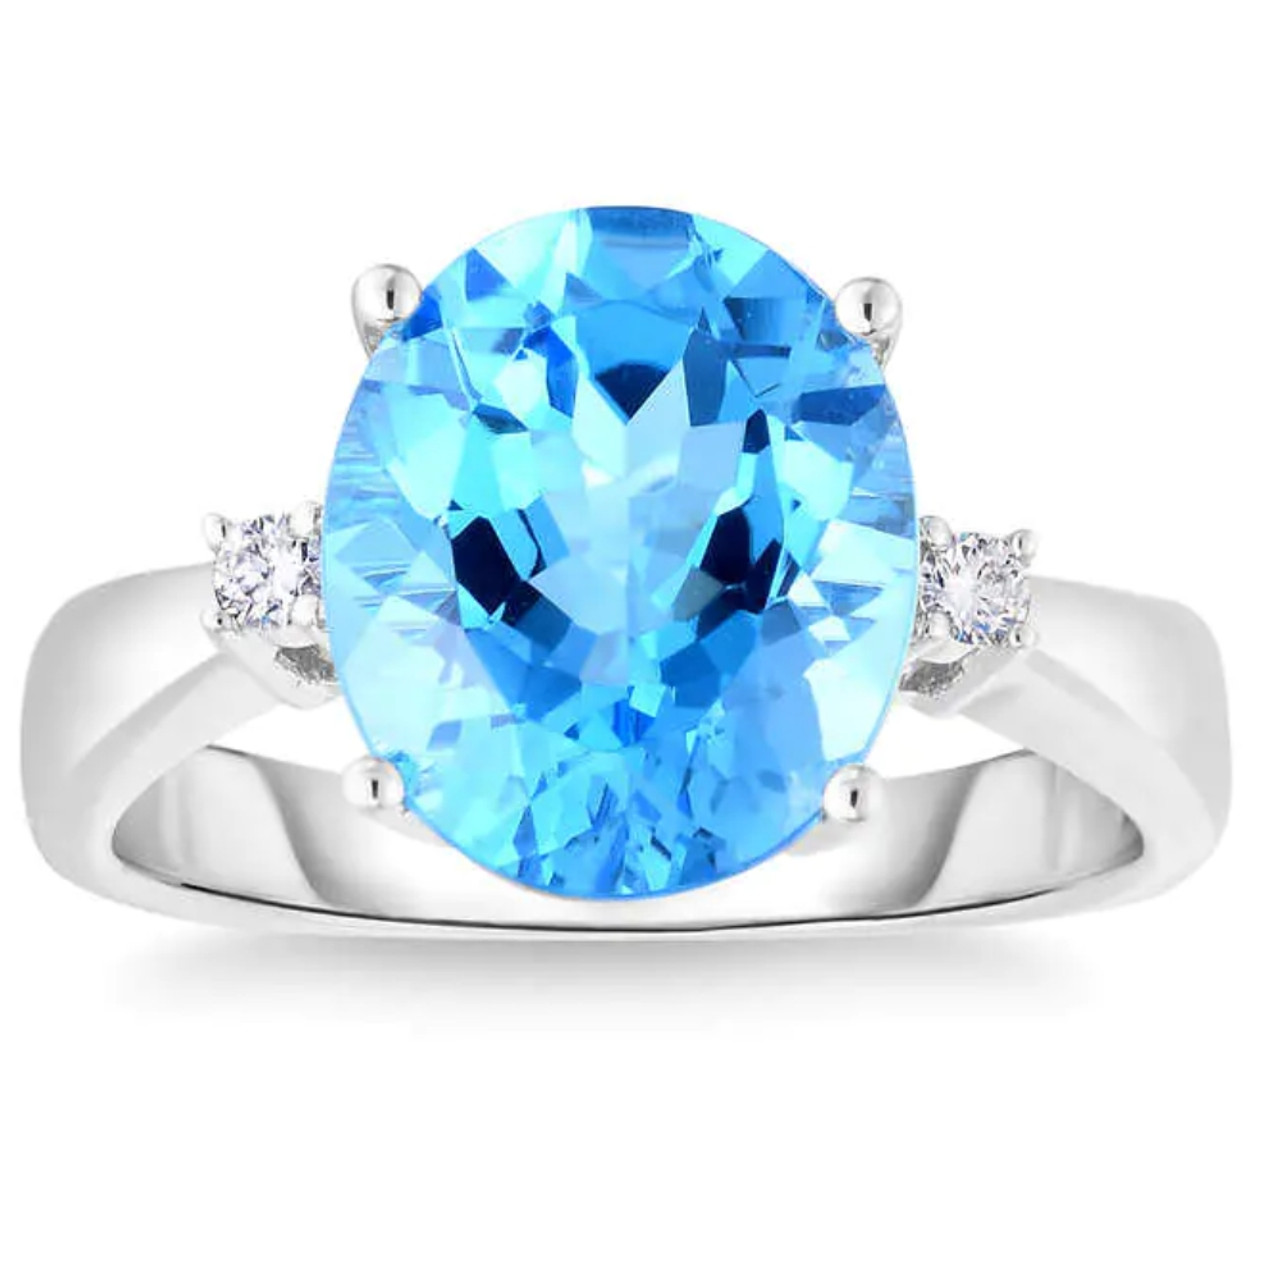 Light Blue Stone Ring, Sky Blue Gold Filled Ring, Sterling Silver Adju